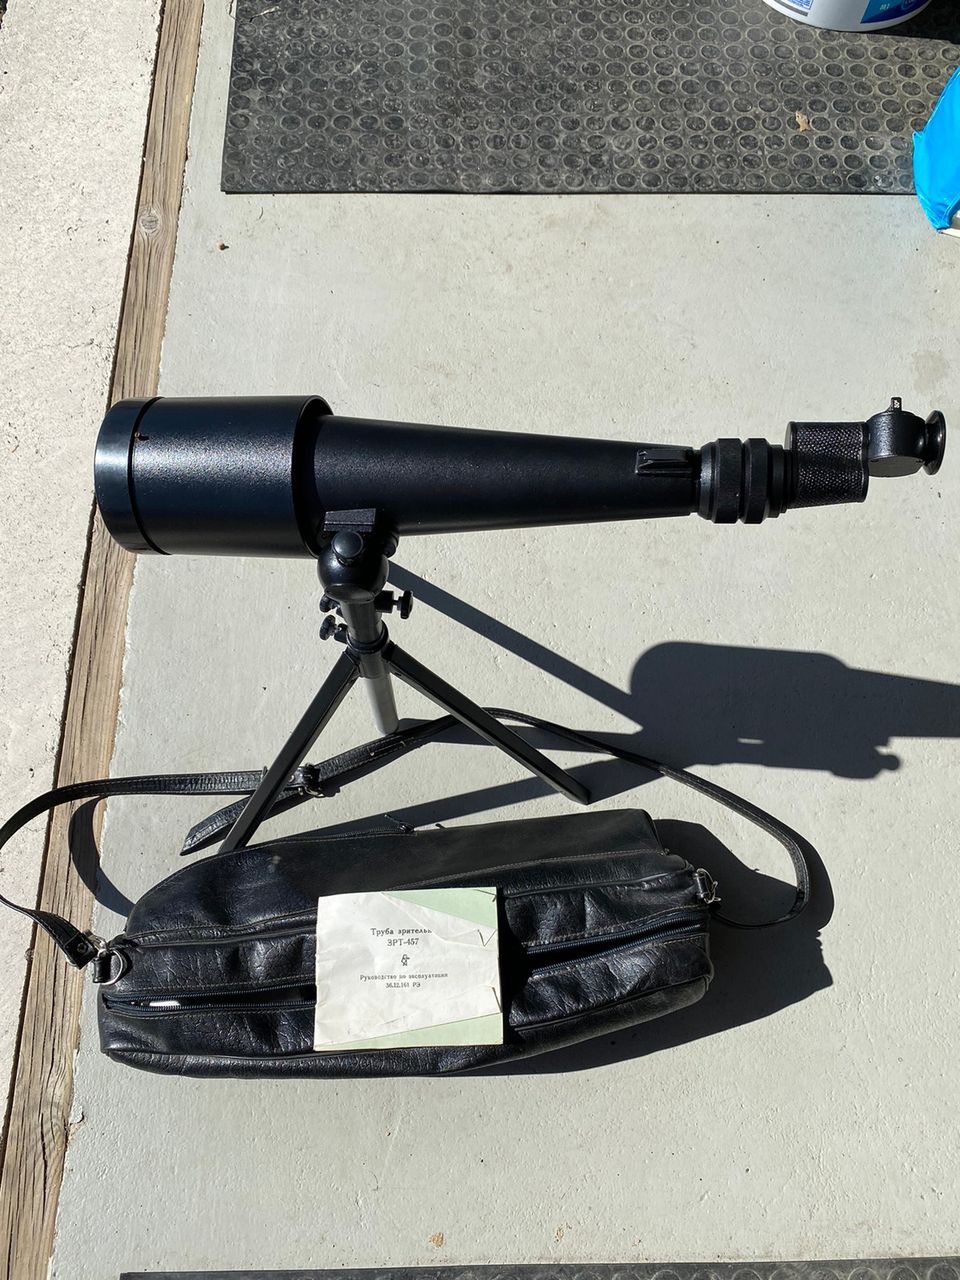 ZRT-457 spotting scope